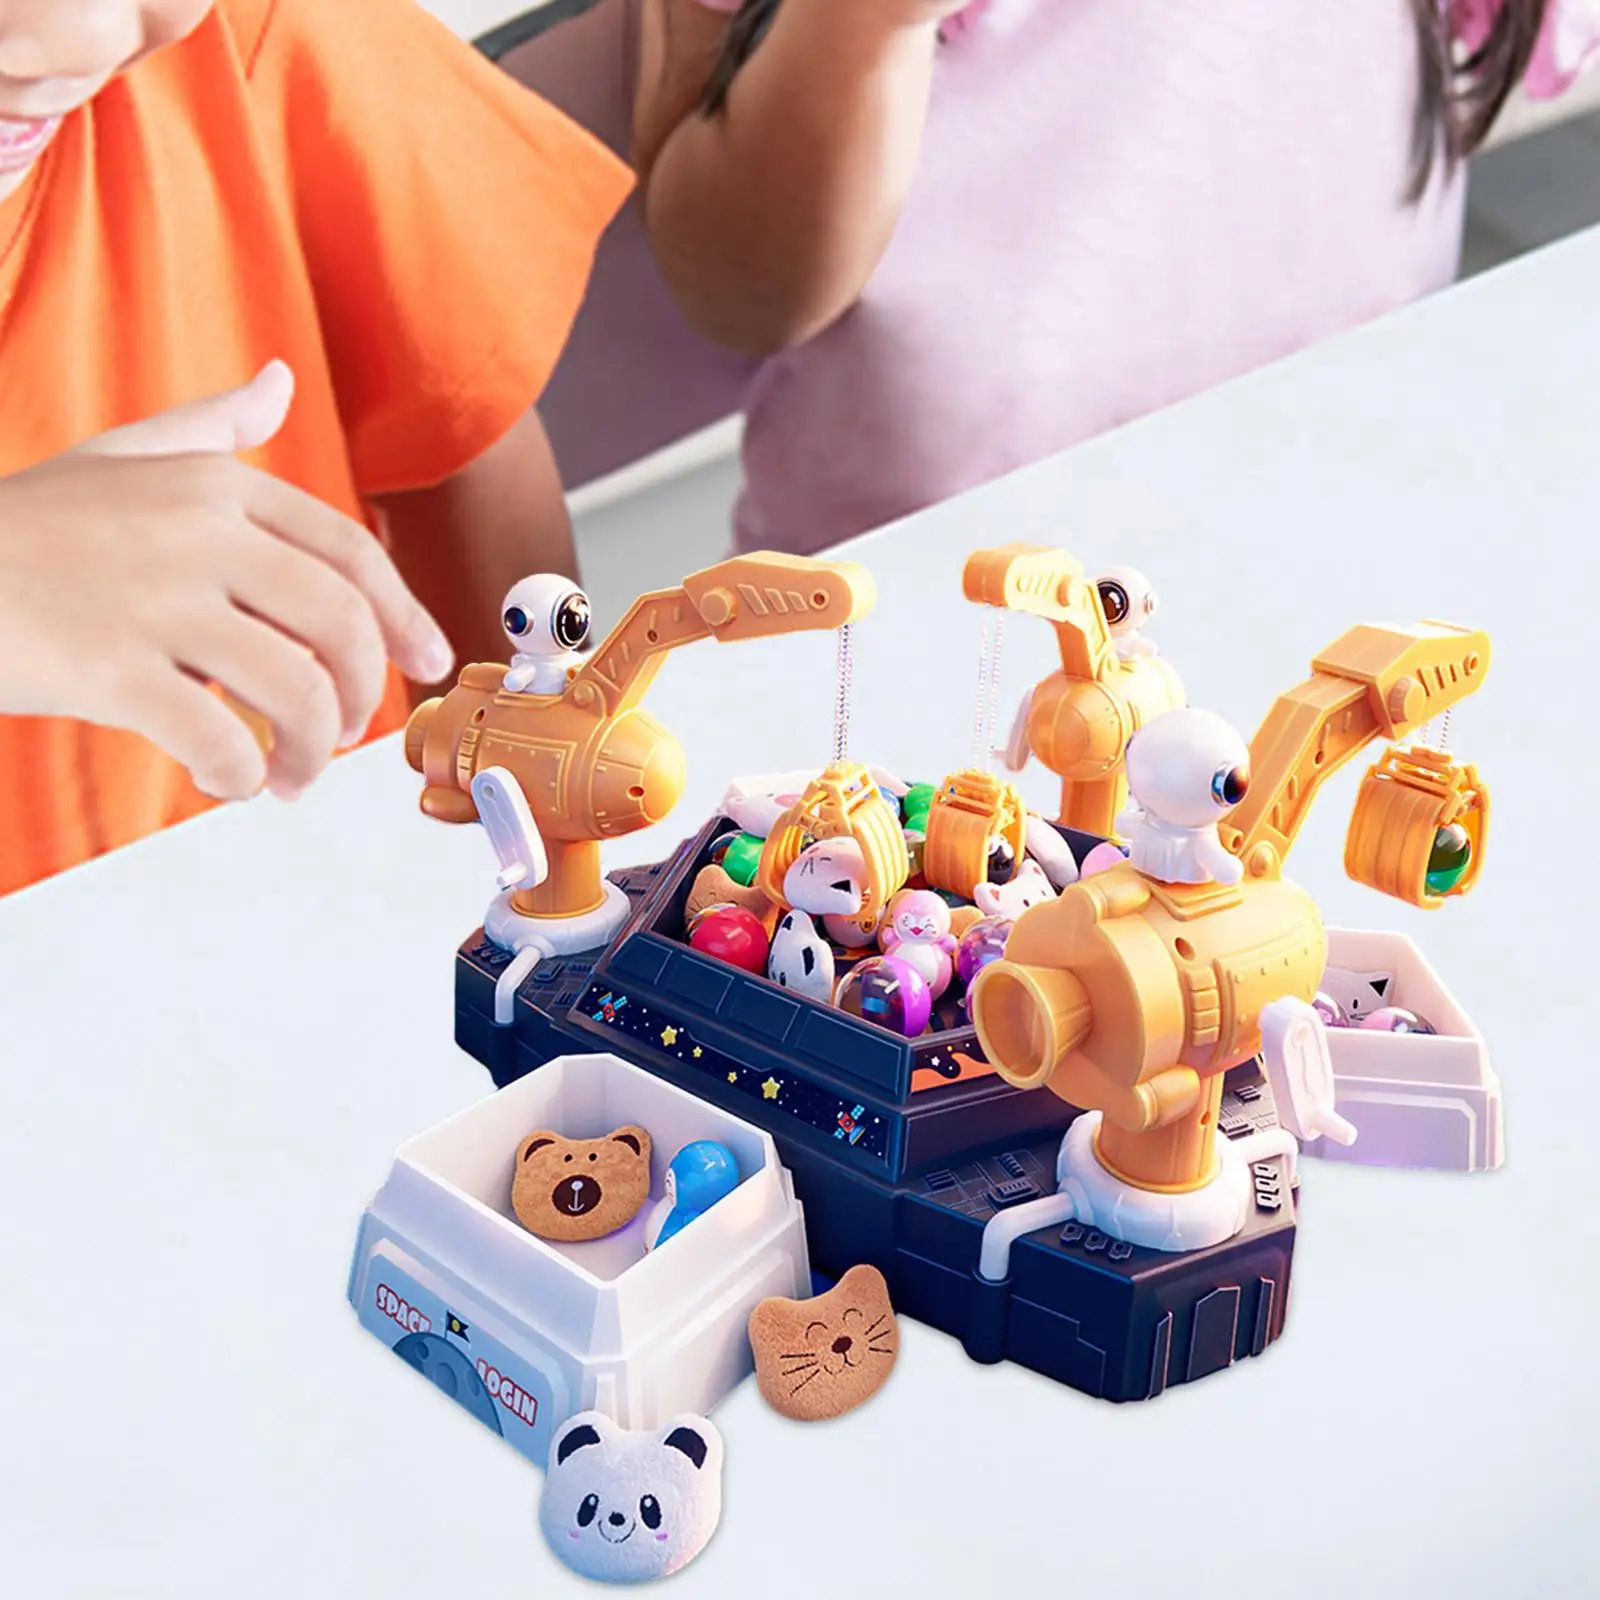 Claw Machine Arcade Game with 4 Mini Plush Dolls Capsules for Girls Boys